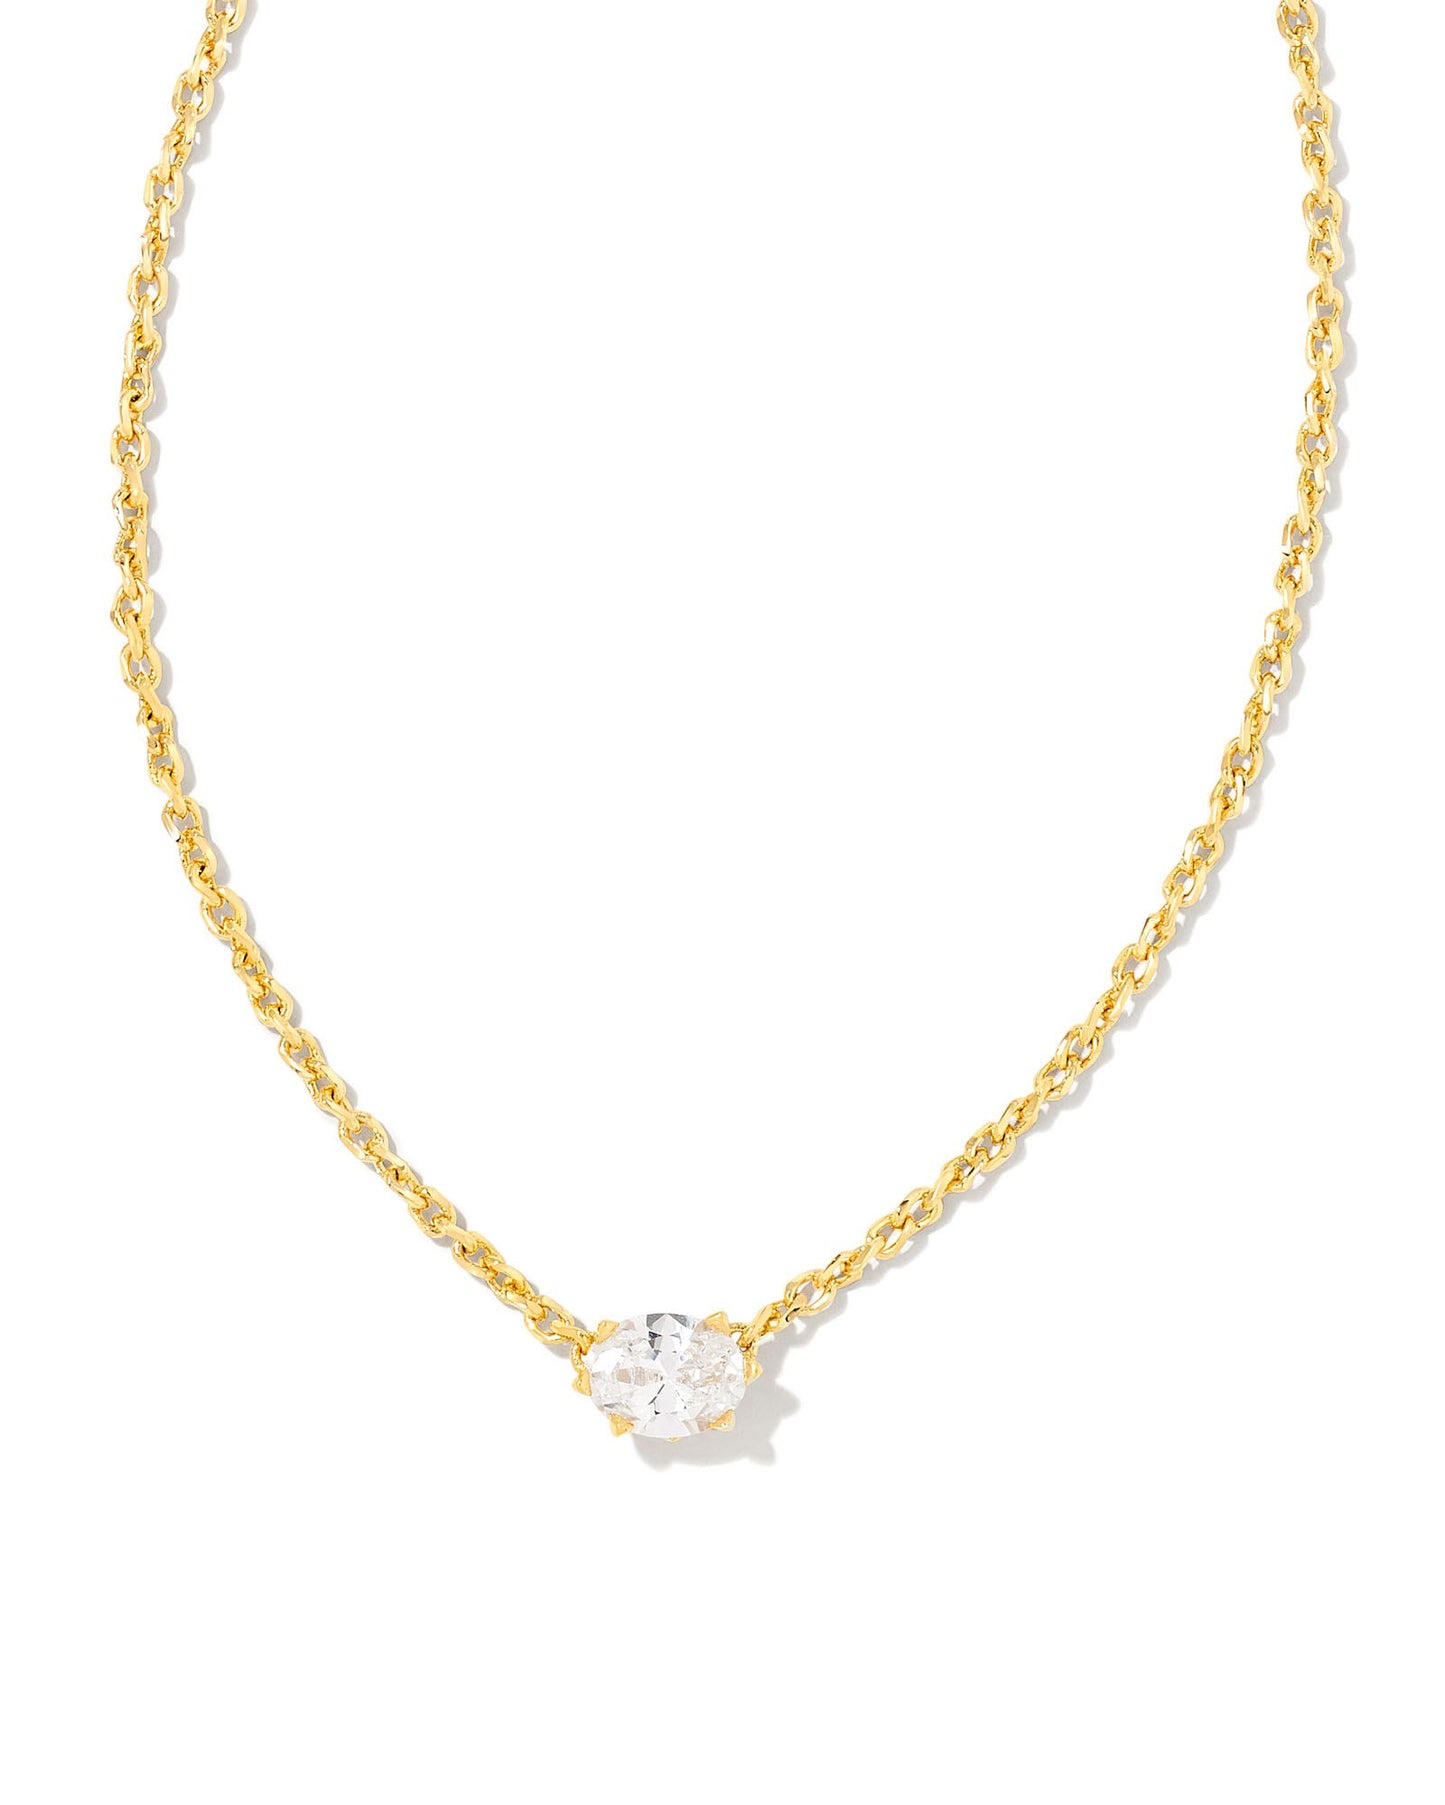 Kendra Scott Callin Crystal Pendant Necklace  - Gold Metal White CZ